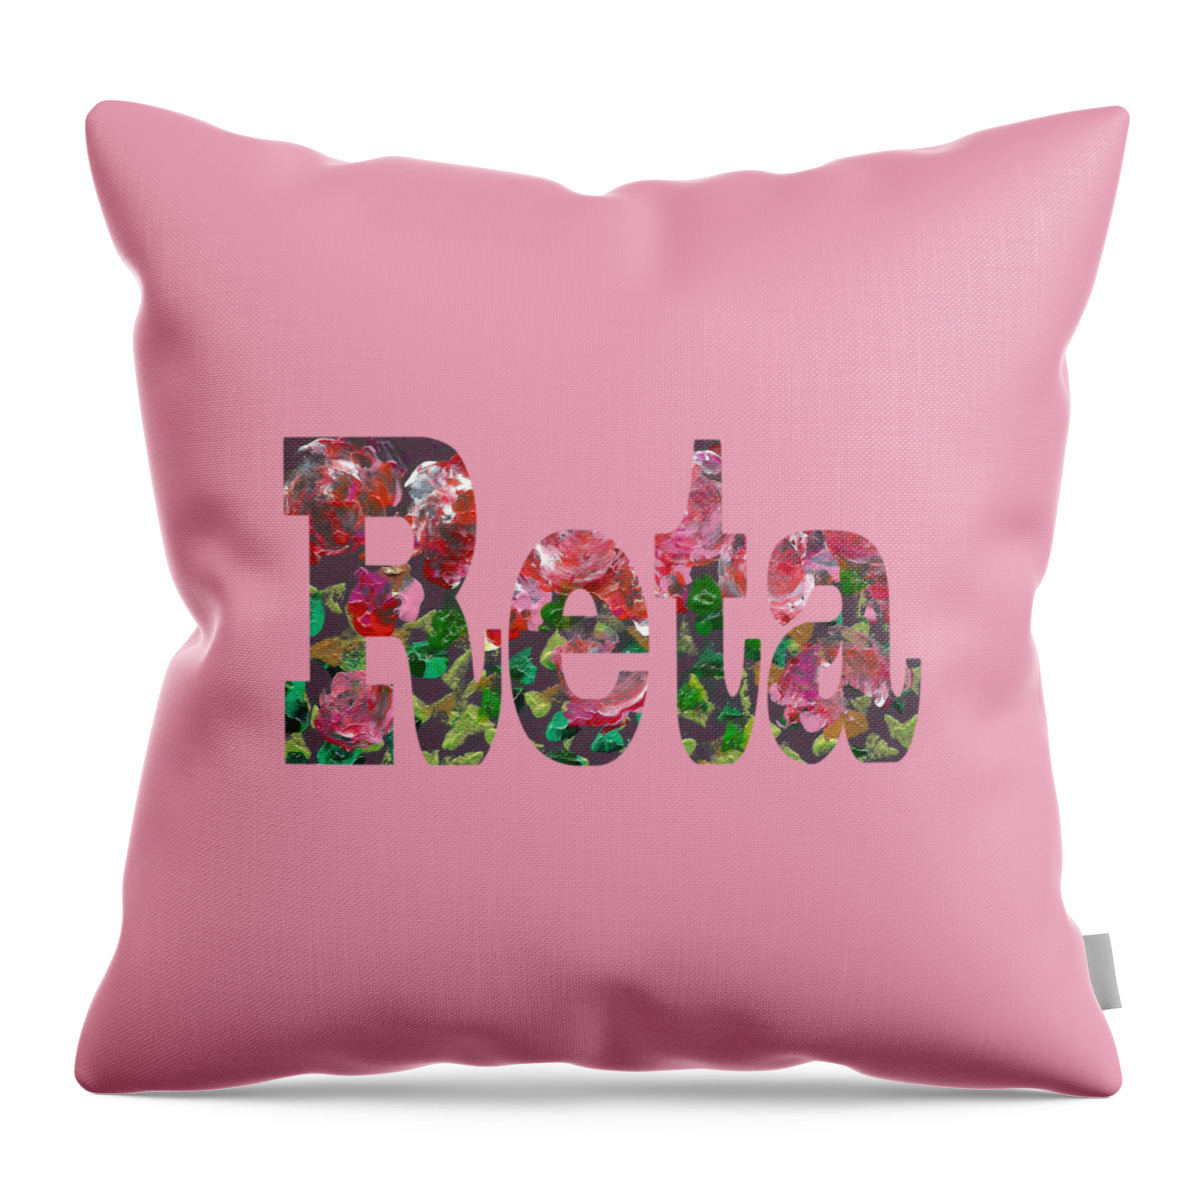 Reta Throw Pillow featuring the digital art Reta by Corinne Carroll